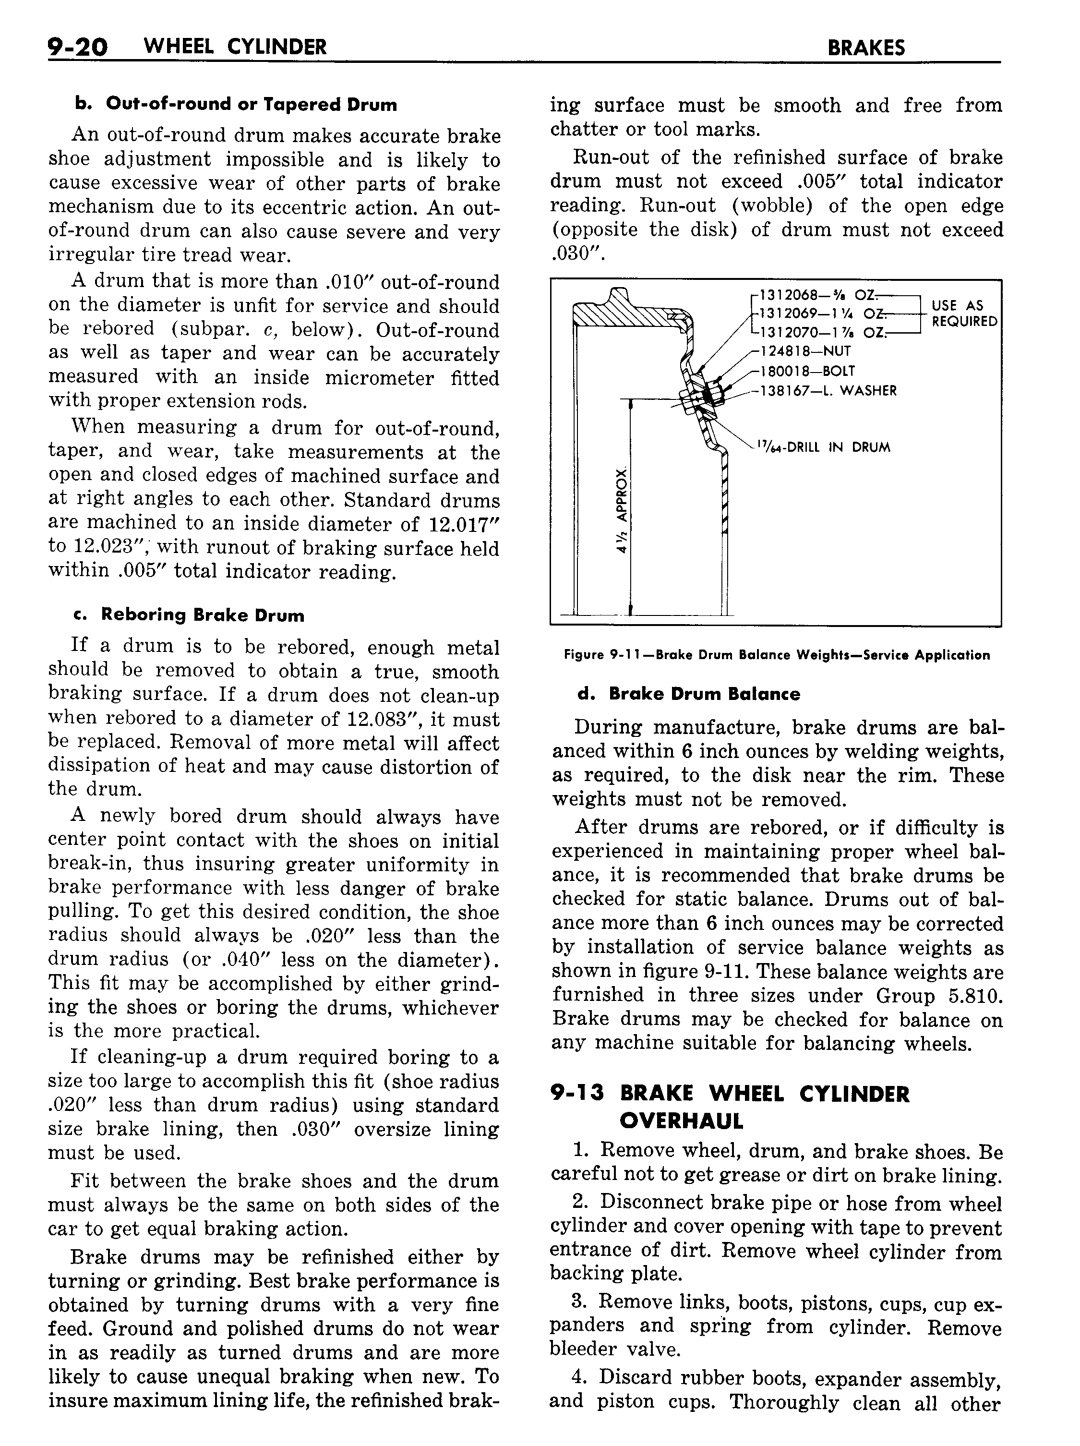 n_10 1957 Buick Shop Manual - Brakes-020-020.jpg